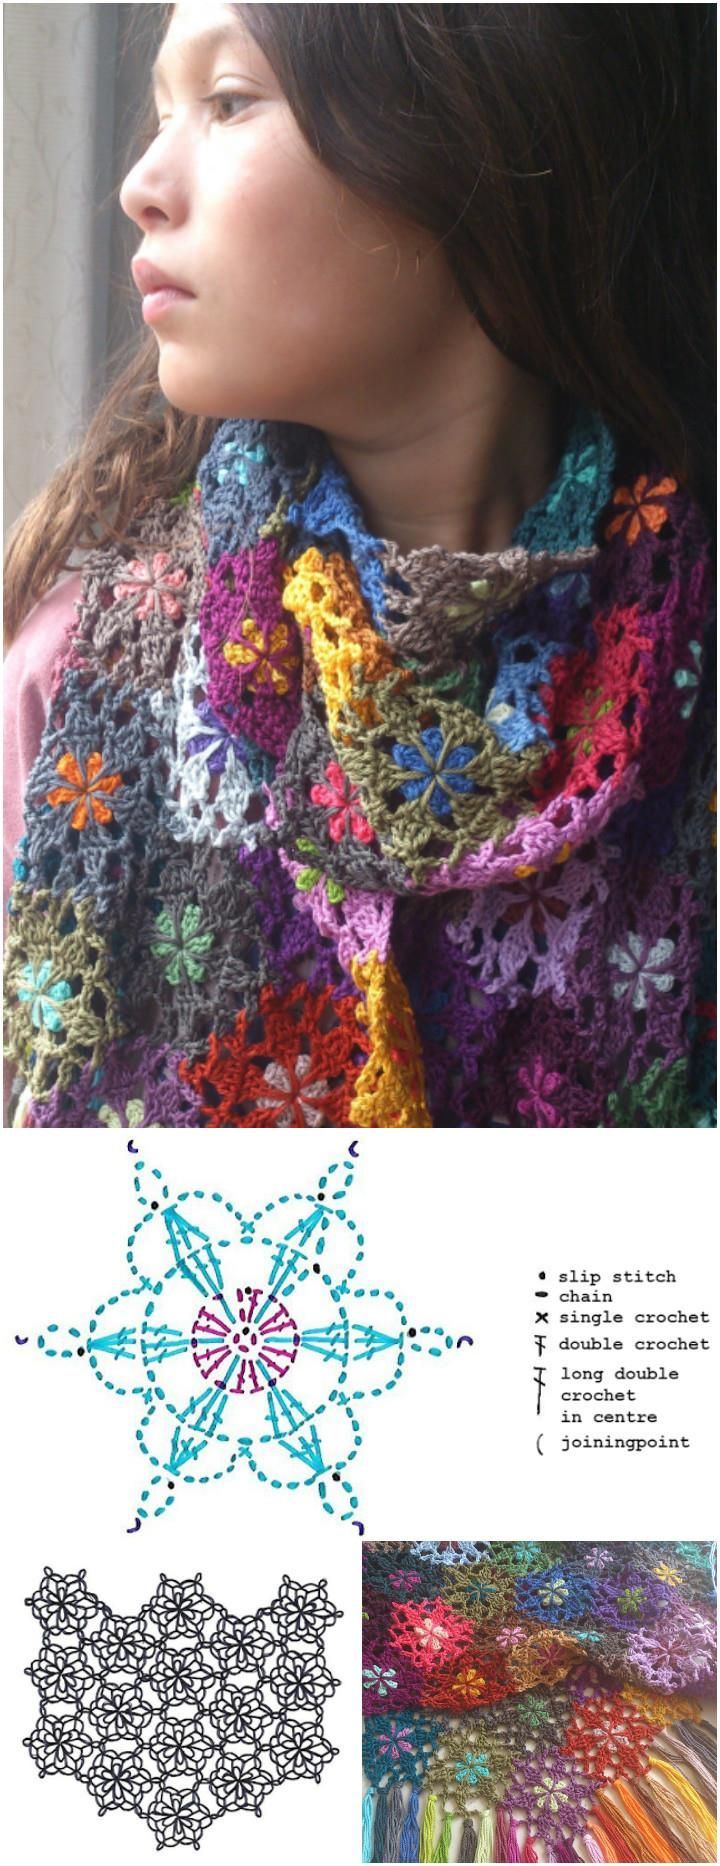 101 Free Crochet Patterns - Full Instructions for Beginners